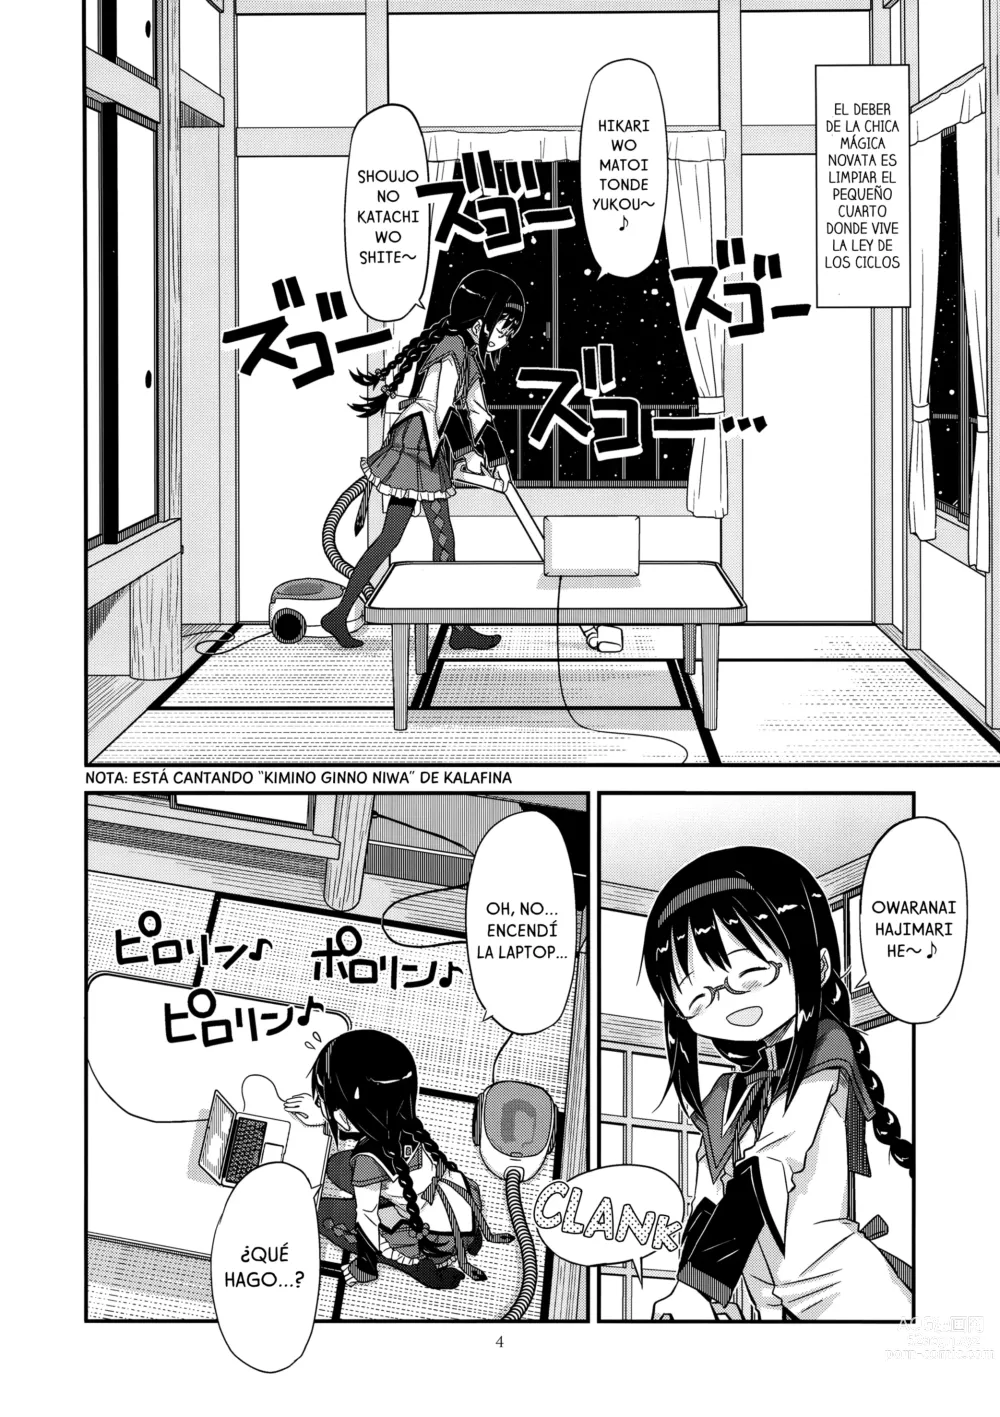 Page 3 of doujinshi GIRLIE:EX02